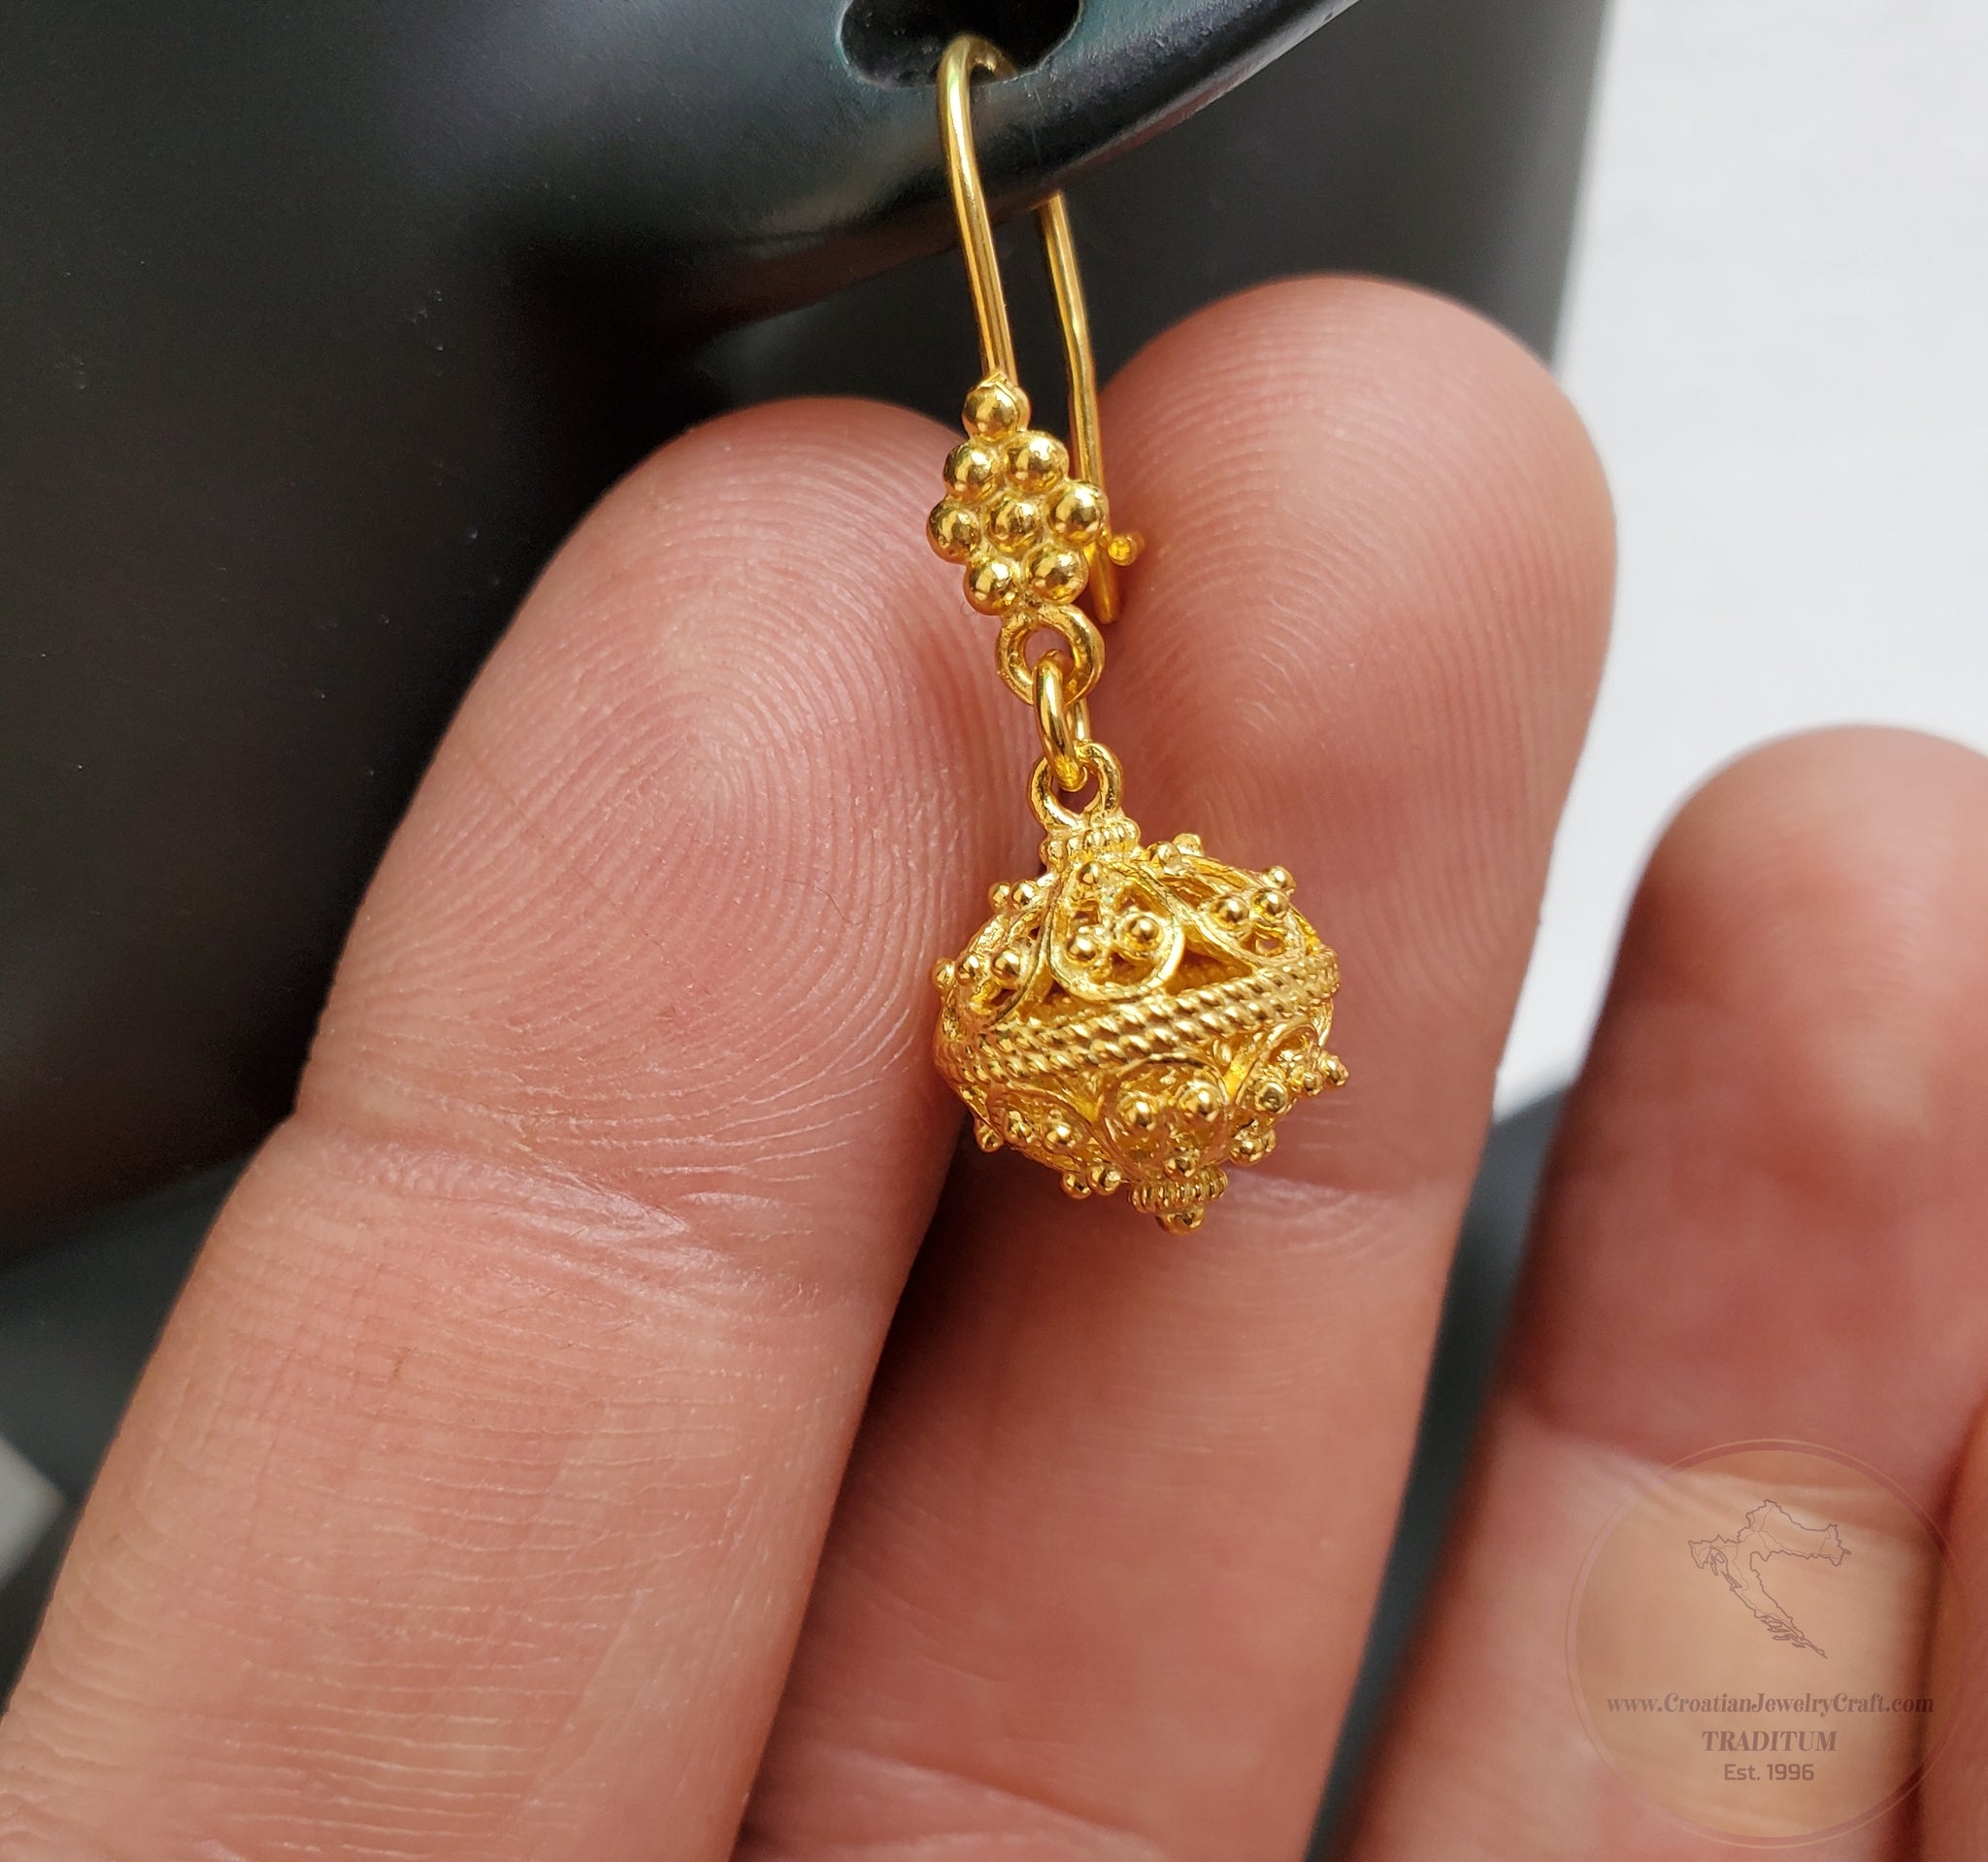 14K Gold Traditional Croatian Filigree Ball Earrings